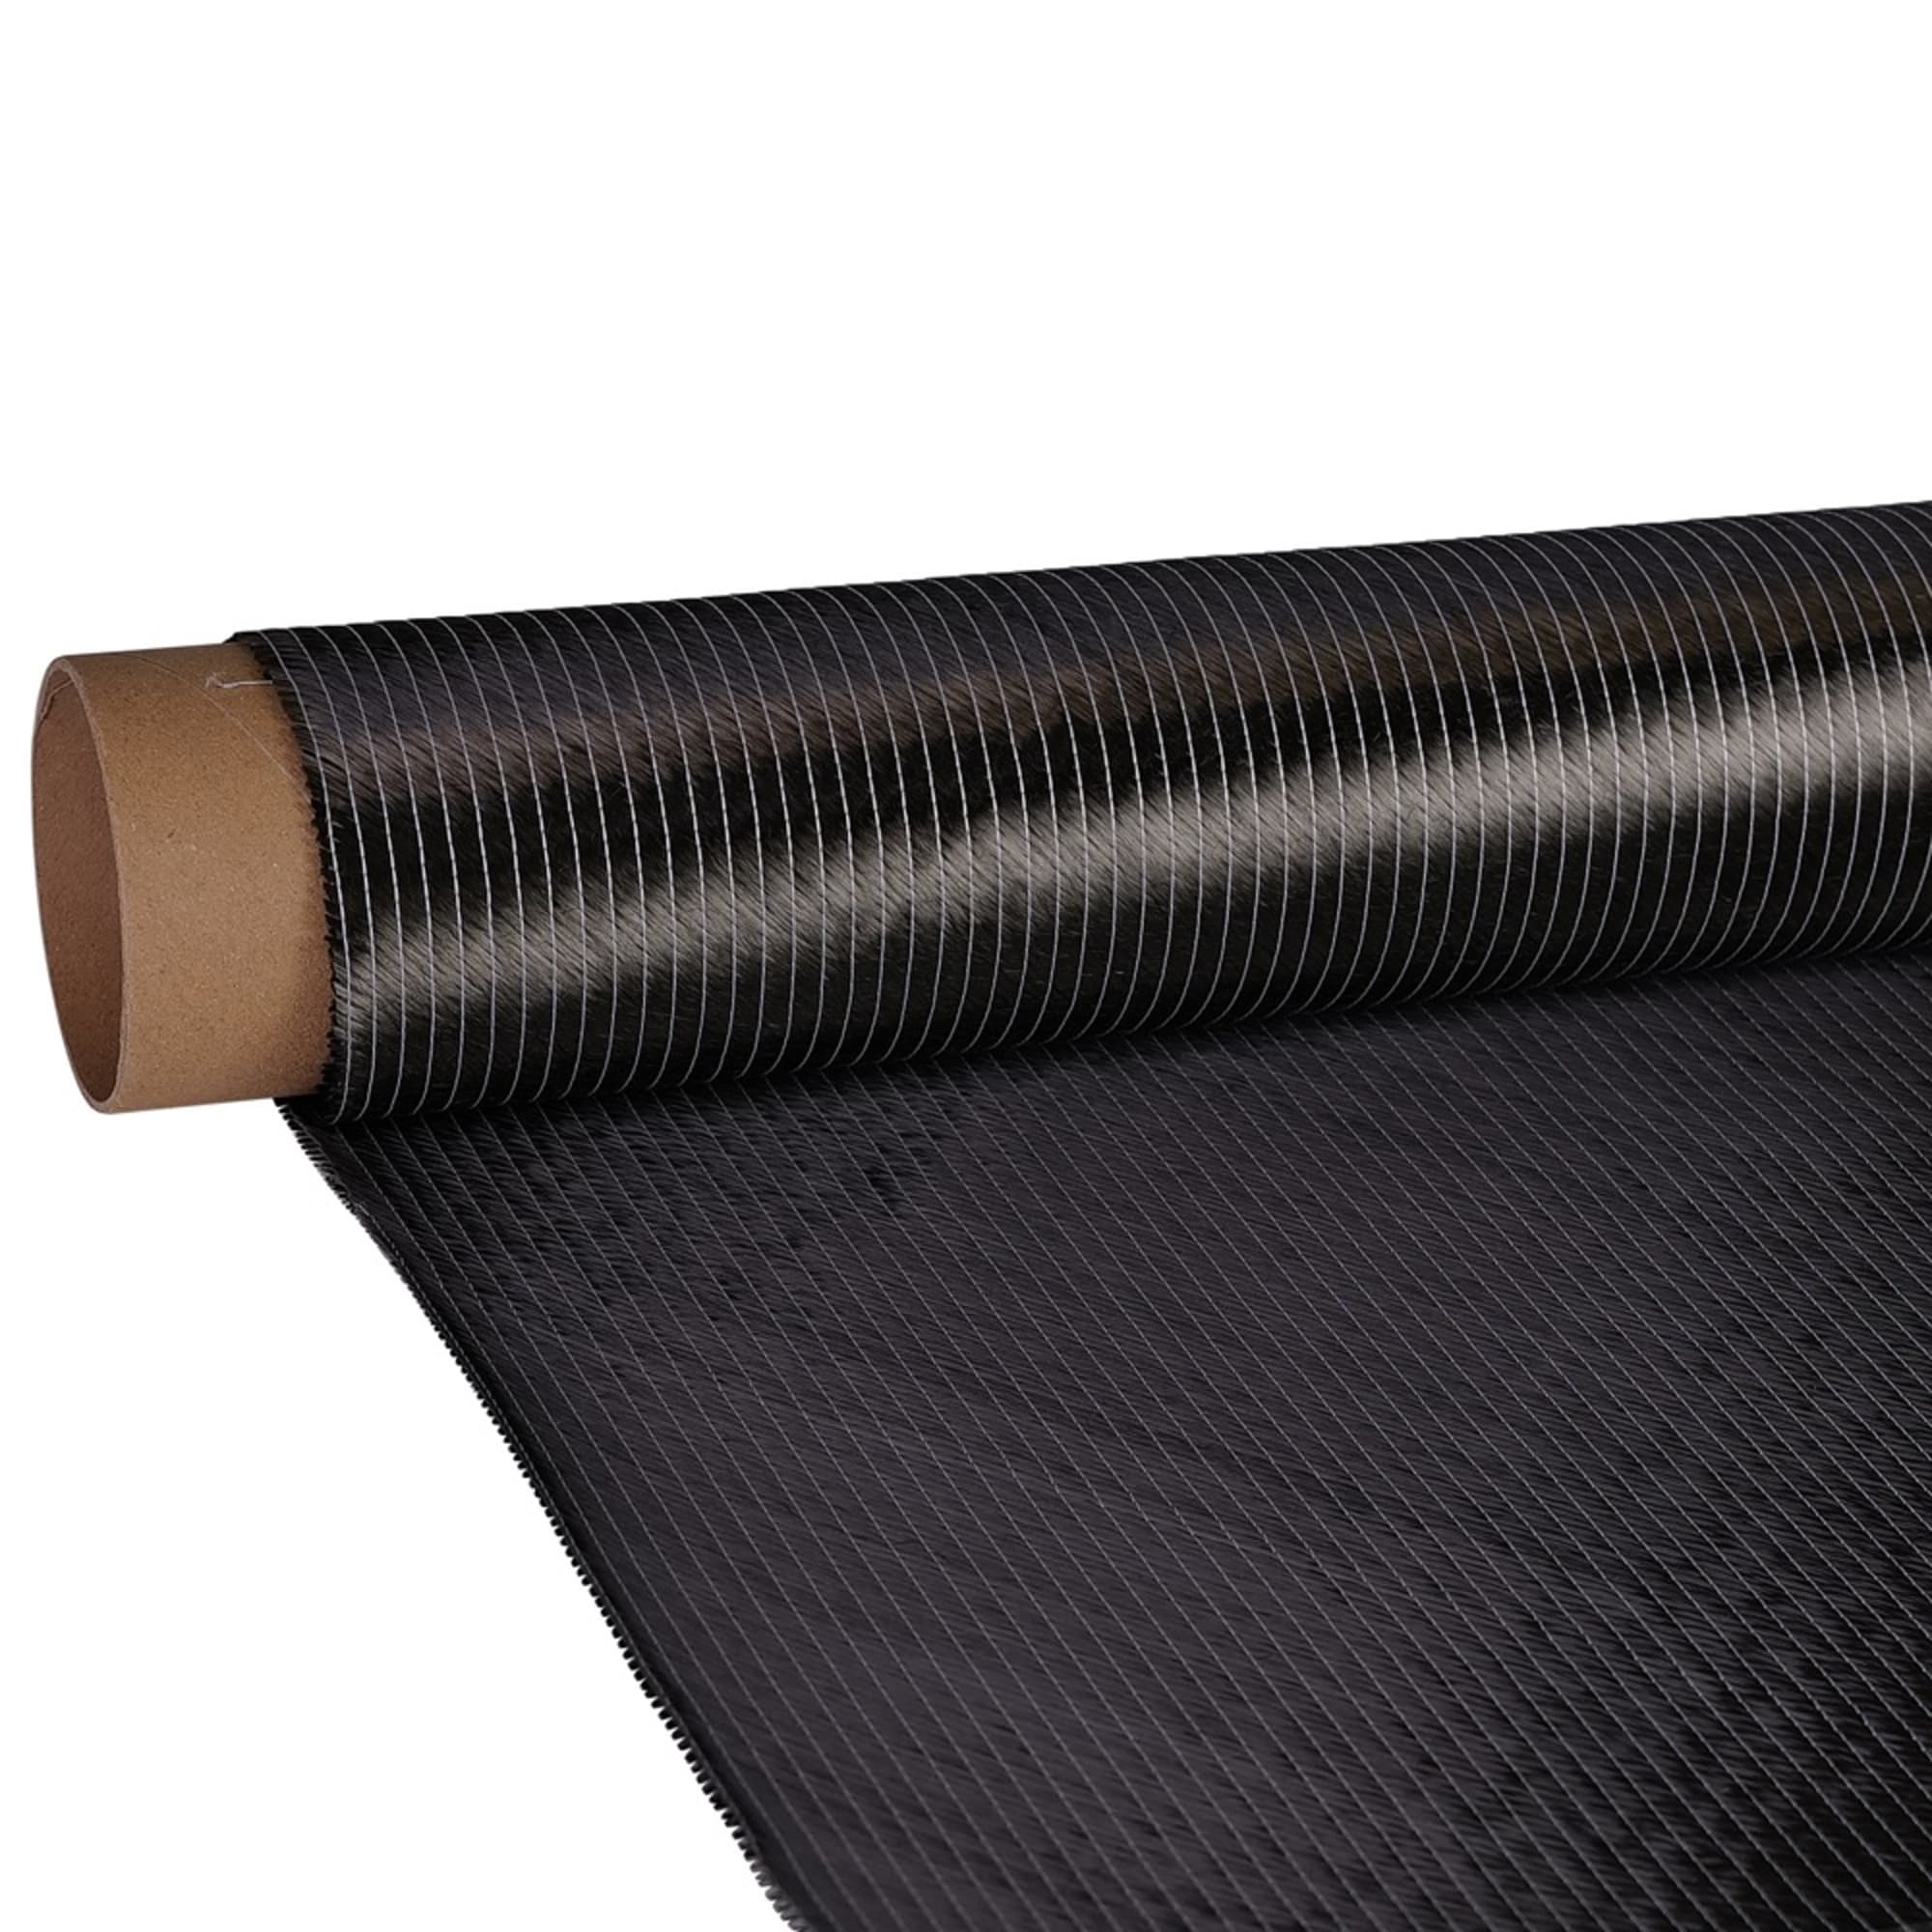 SIGRATEX® Carbon non-crimp fabric 410 g/m² (biaxial) 127 cm, image 6